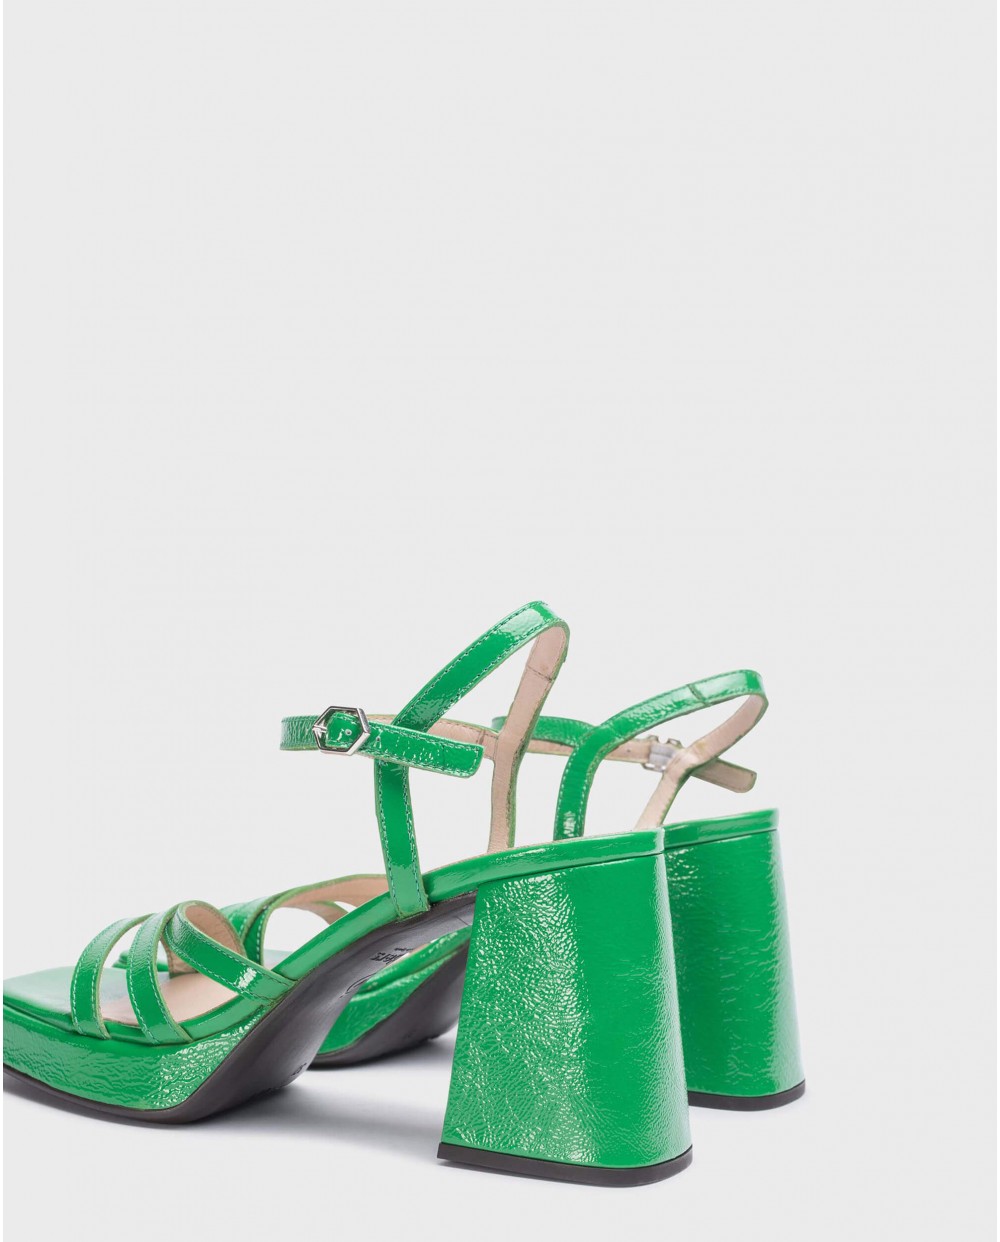 Jade Love sandal